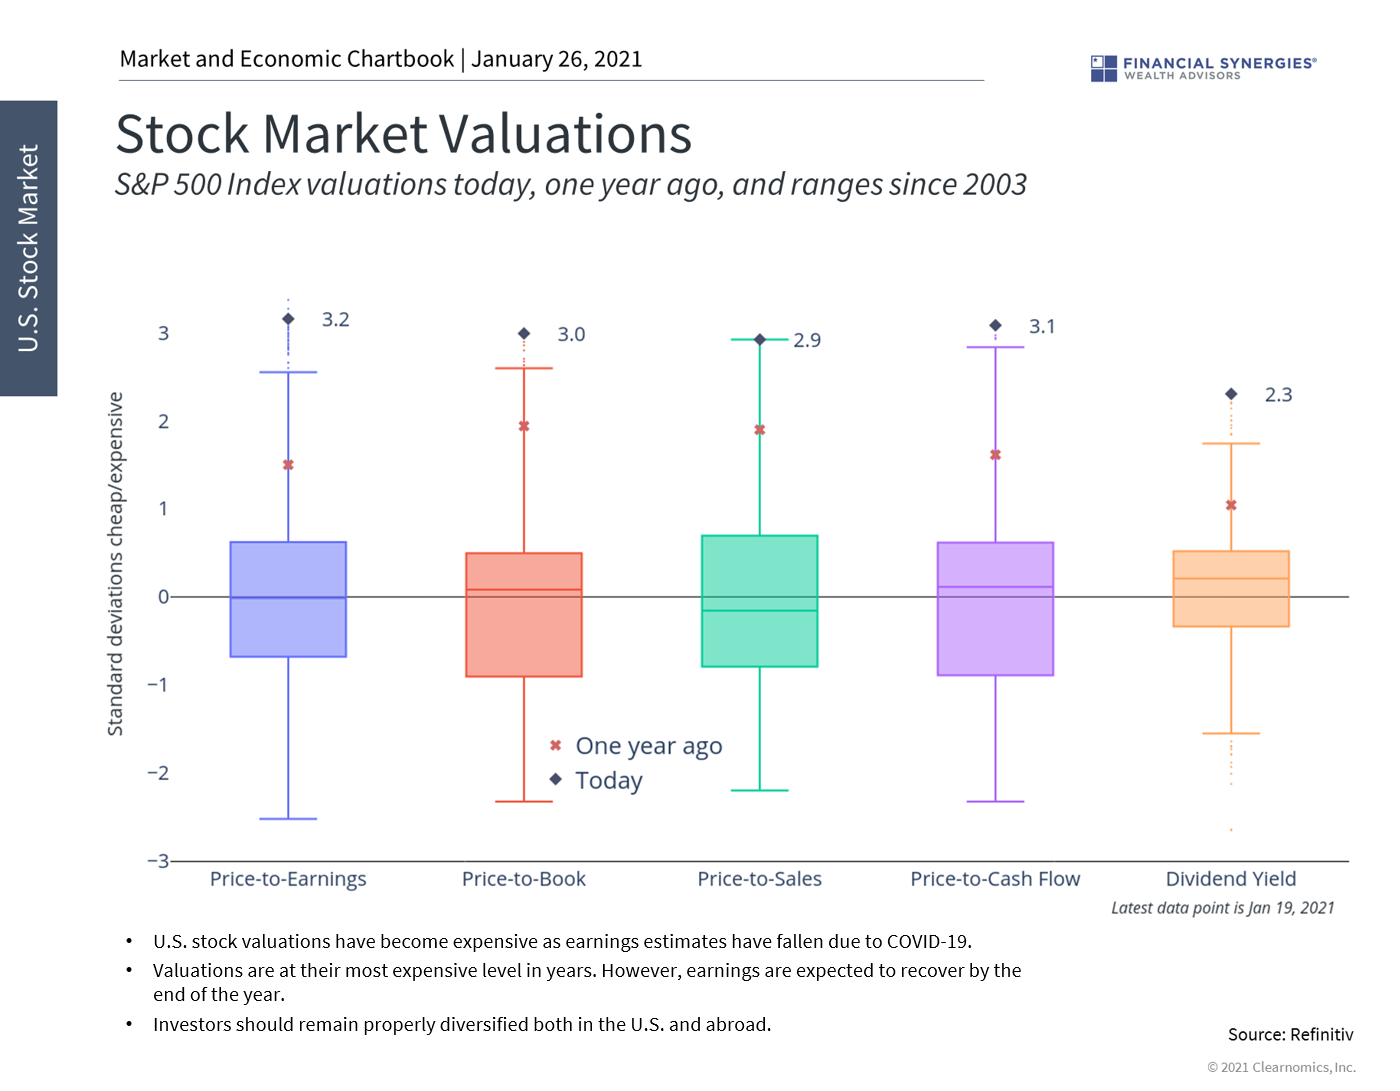 Market Valuations